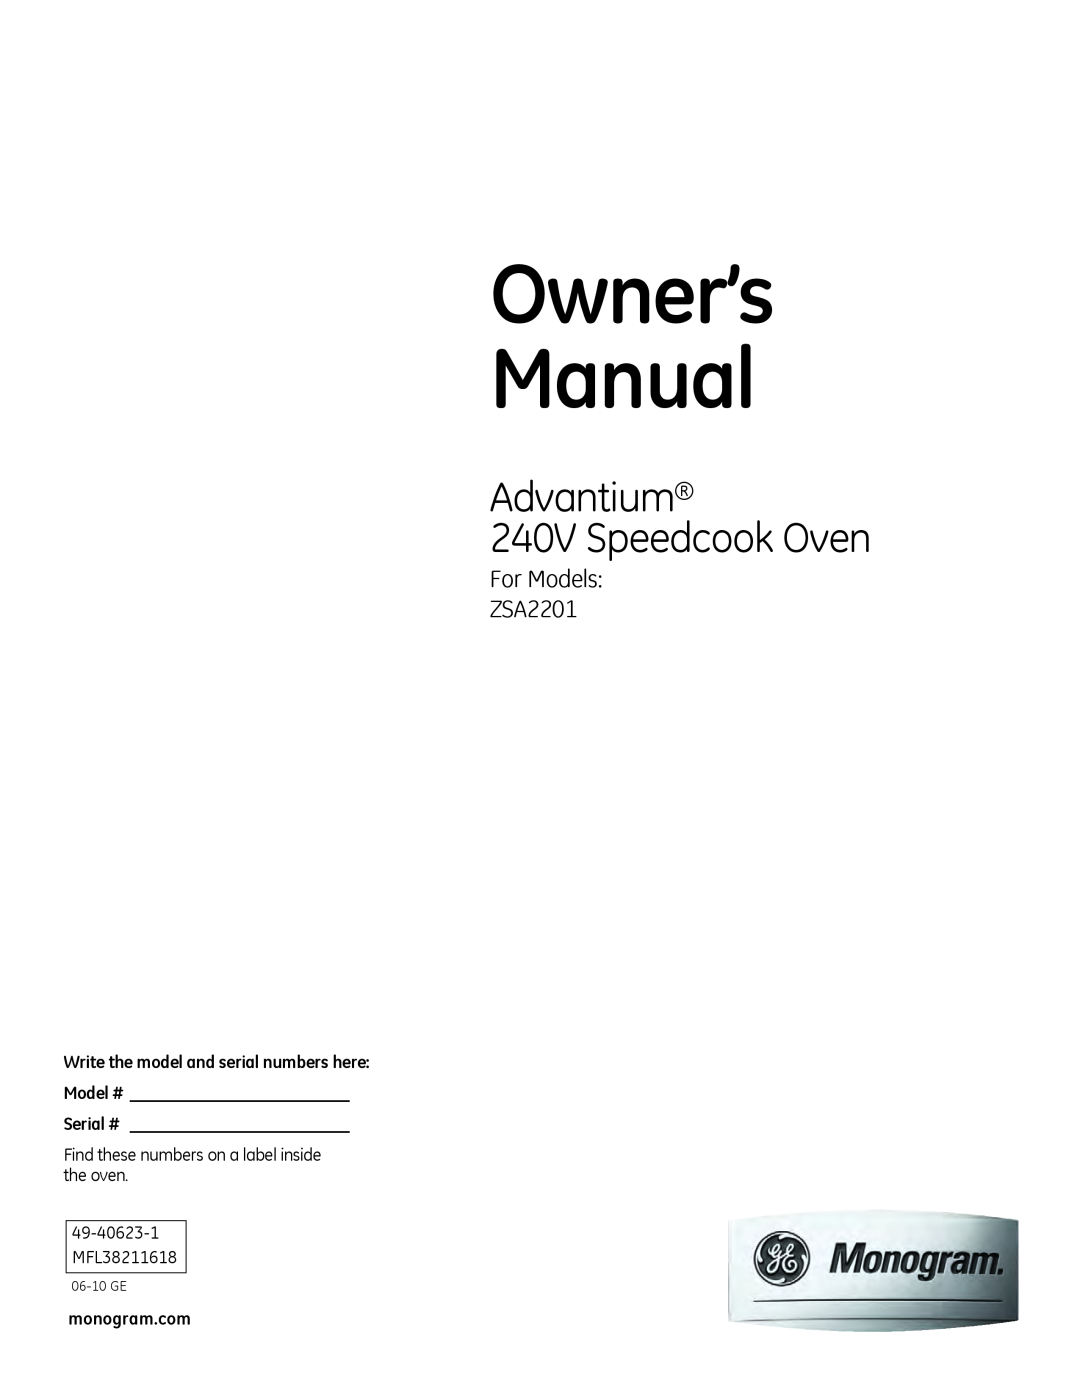 GE owner manual Owner’s Manual, Advantium 240V Speedcook Oven, For Models ZSA2201, monogram.com, 06-10 GE 